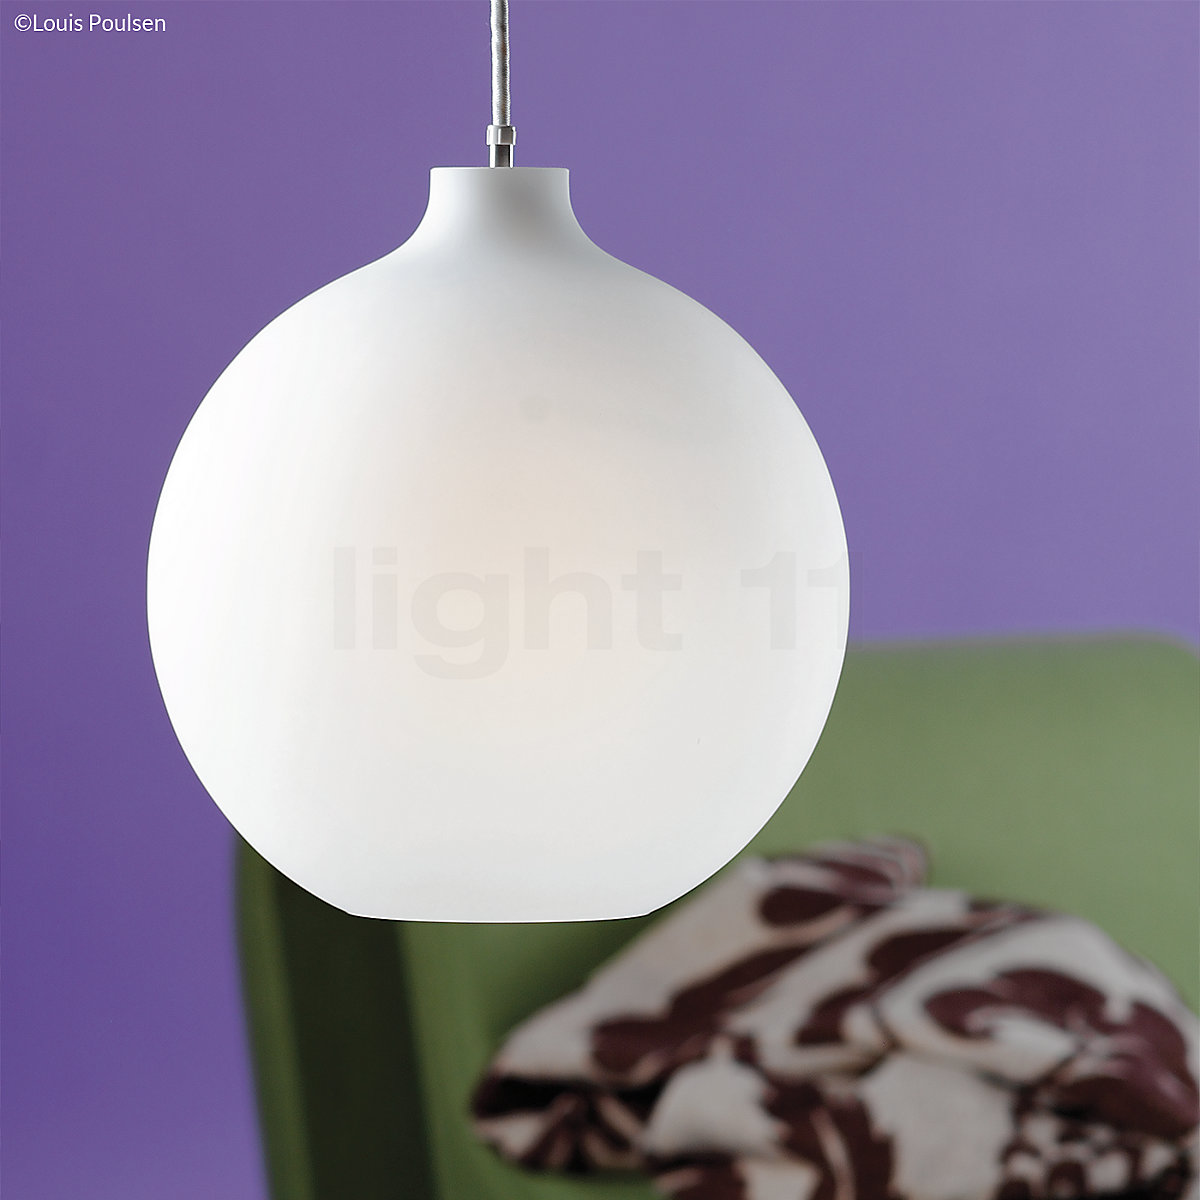 Buy Louis Poulsen Wohlert Pendant Light at light11.eu